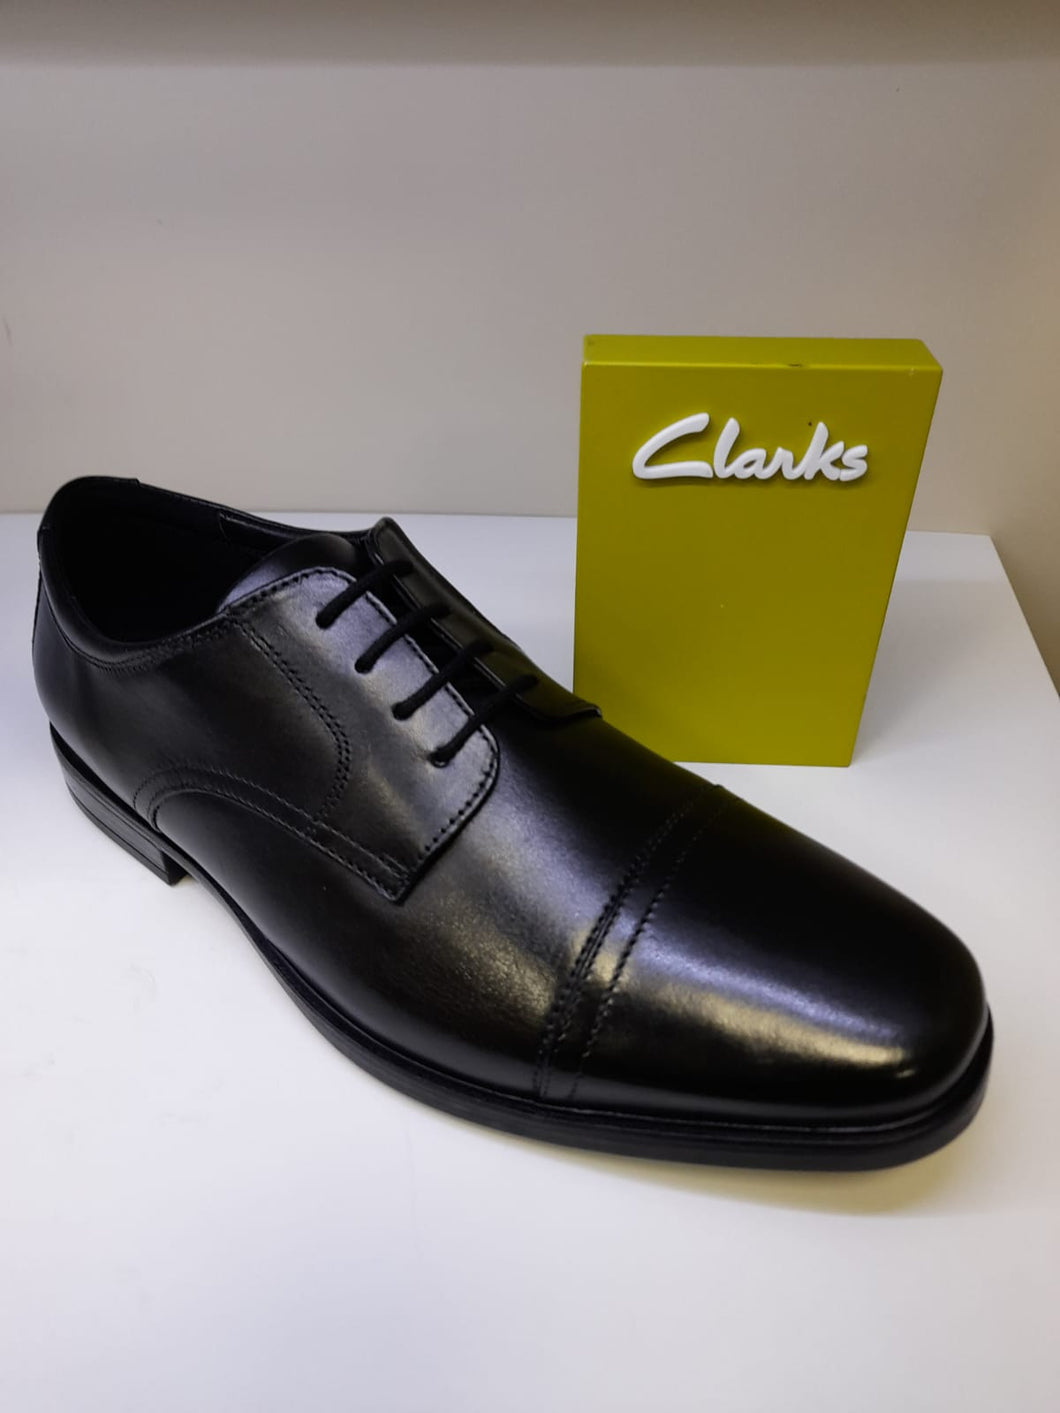 Clarks Men's Black Leather Formal Shoe - Laced - Howard Cap - Toecap Detail